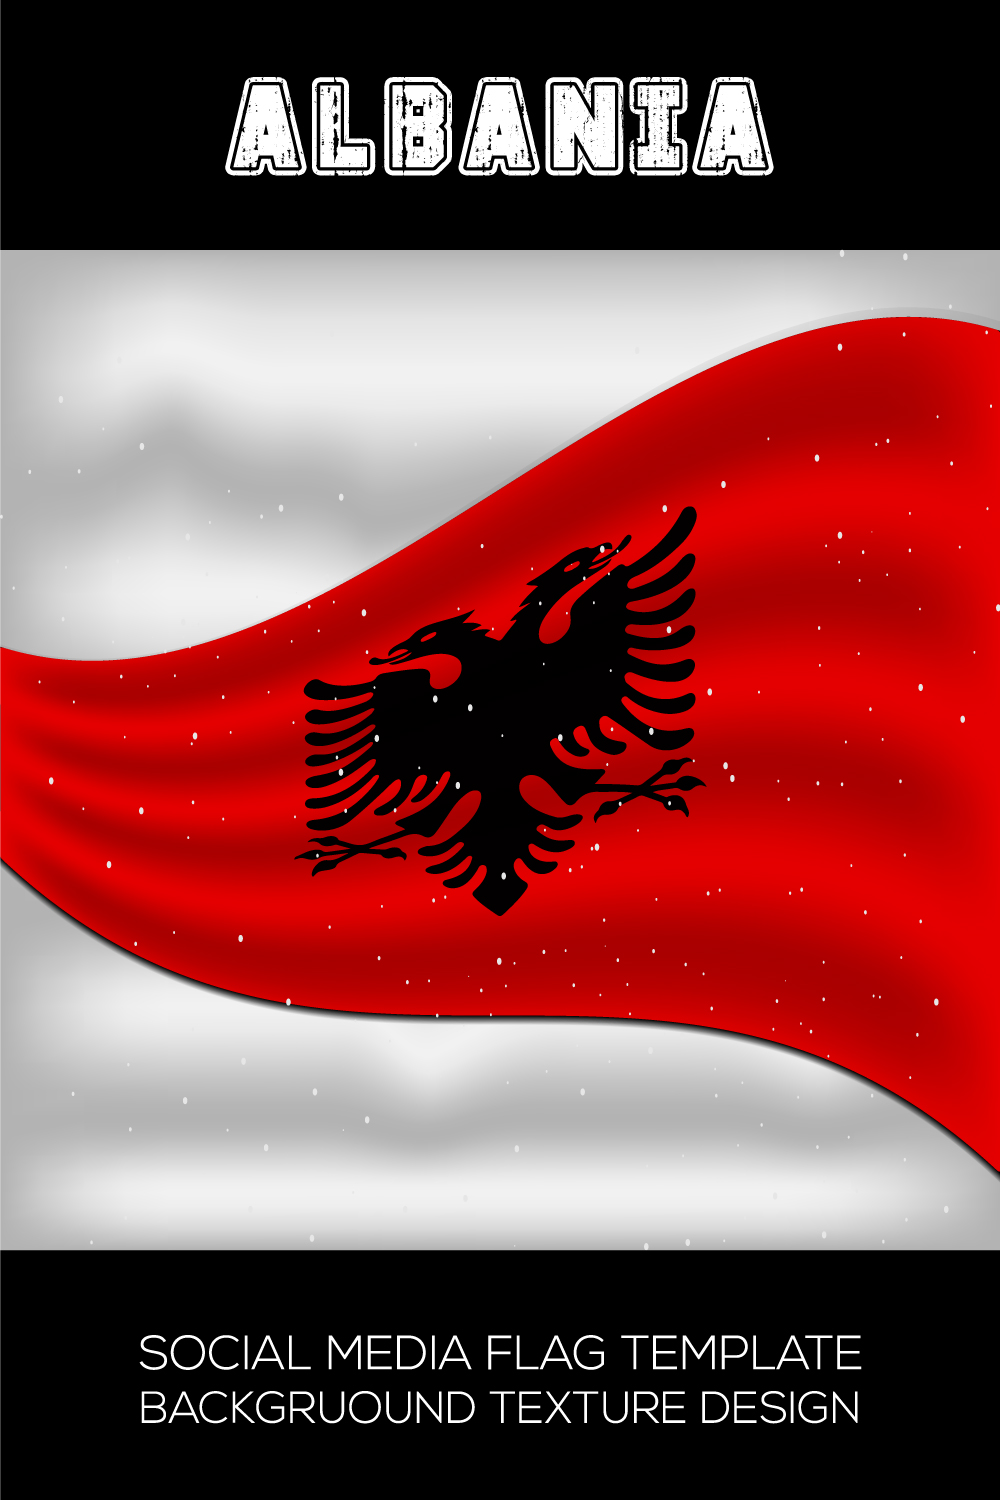 Unique image of the flag of Albania.